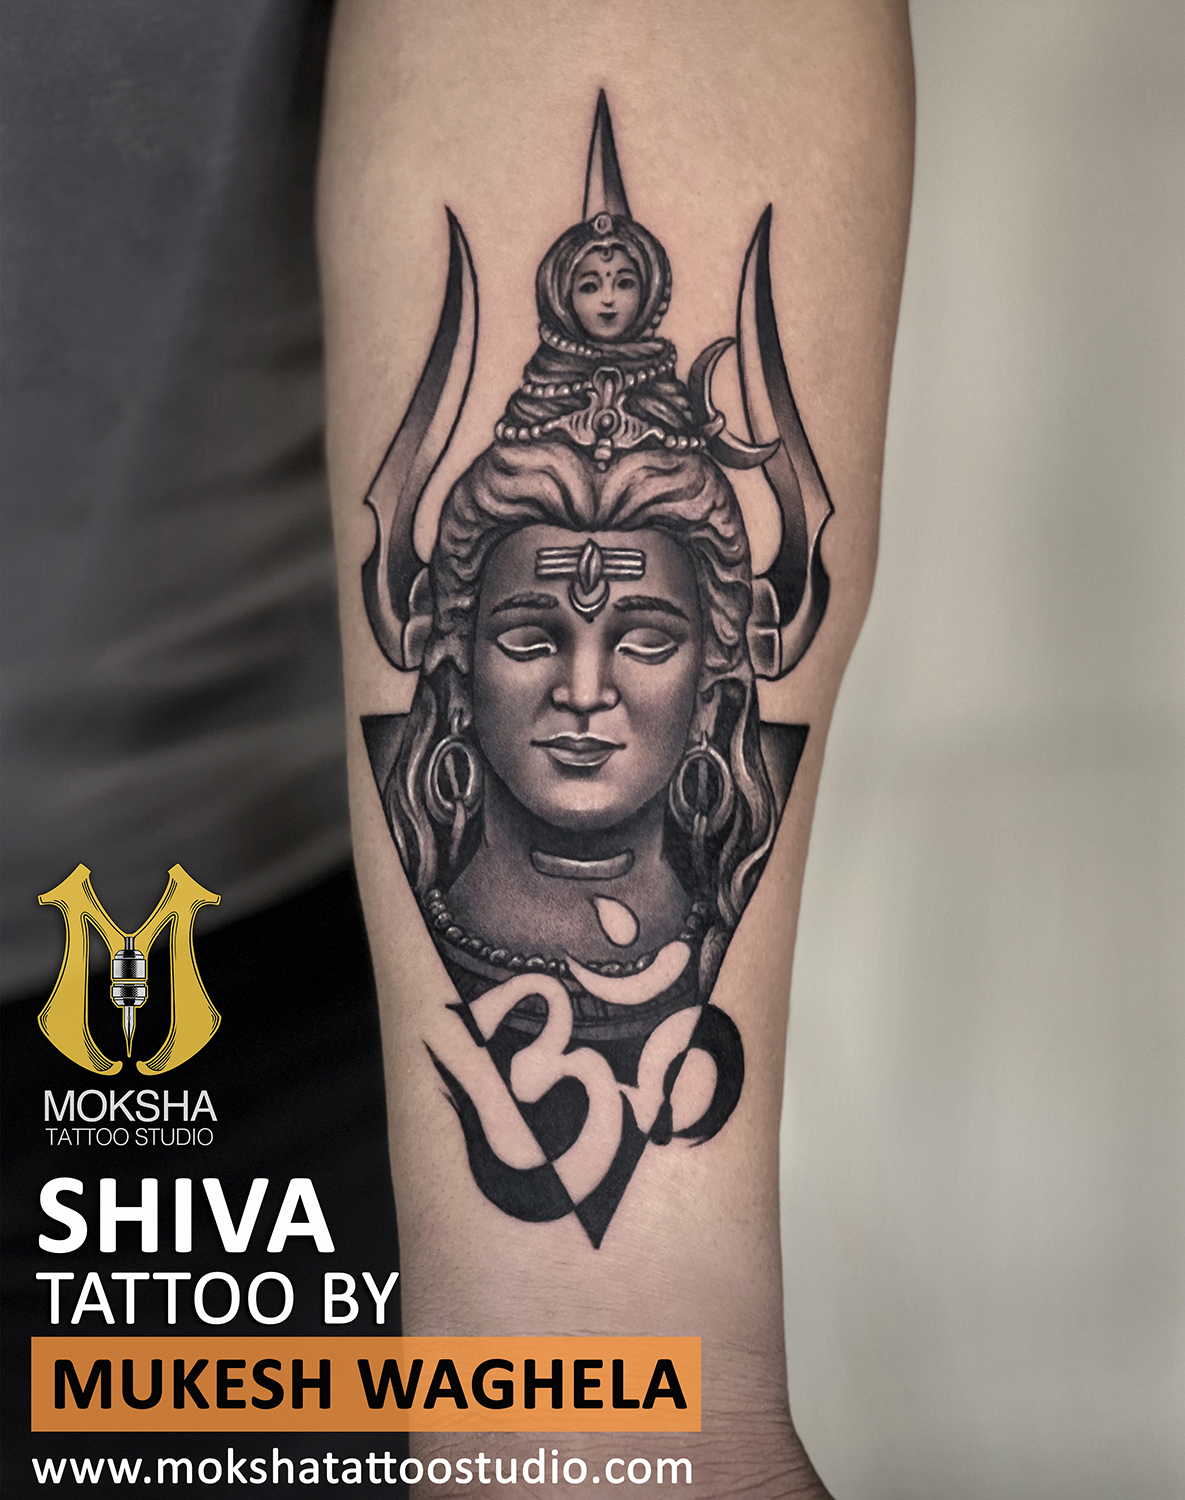 Shiva Tattoo by Mukesh Waghela The Best Tattoo Artist In Goa At Moksha  Tattoo Studio Goa India  Best Tattoo Studio Goa Safe Hygienic  Moksha  Tattoo